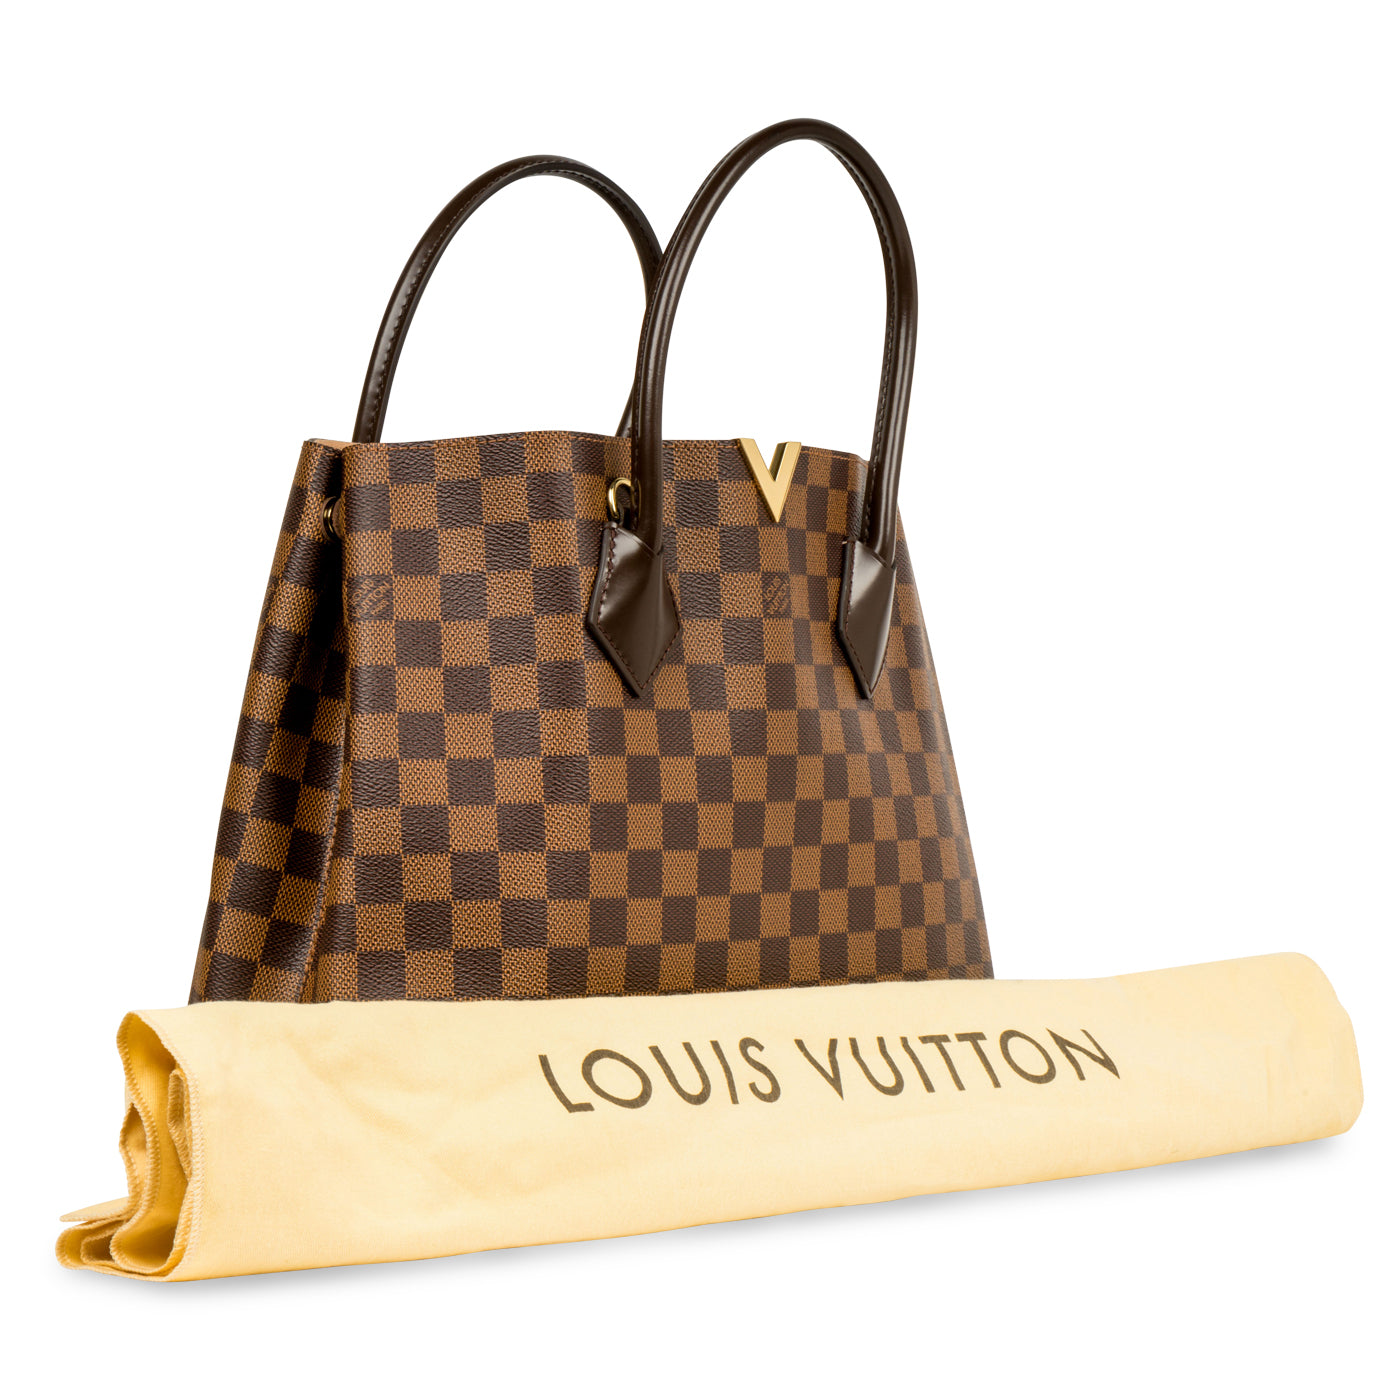 Louis Vuitton - Kensington - Damier Ebene - New